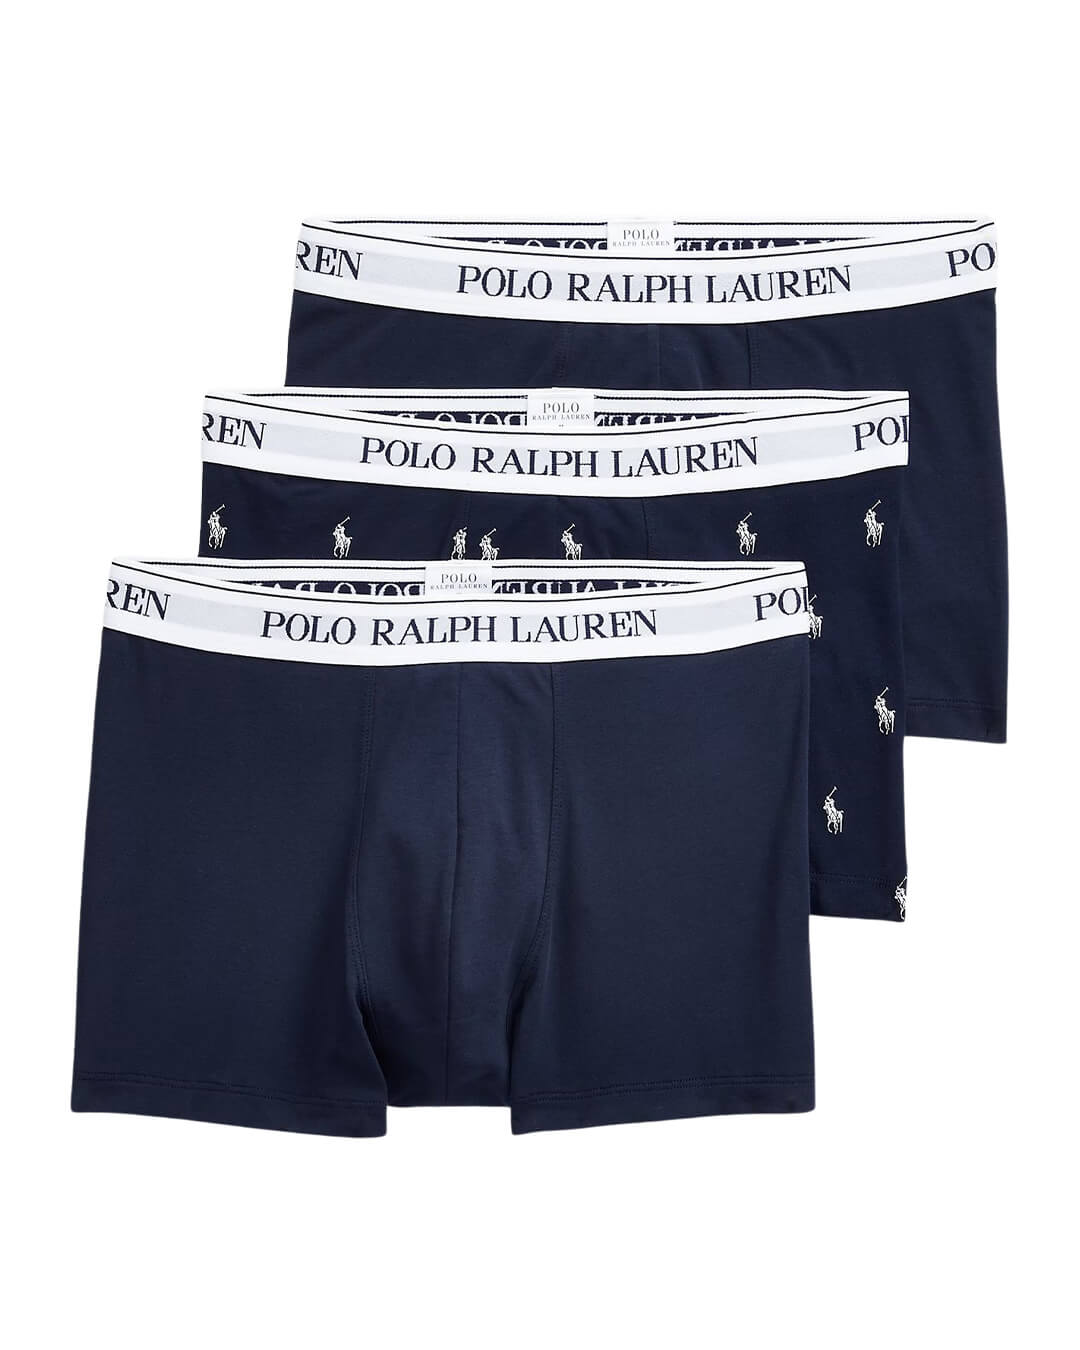 Polo Ralph Lauren Underwear Polo Ralph Lauren Navy Classic Stretch Cotton Boxer 3-Pack